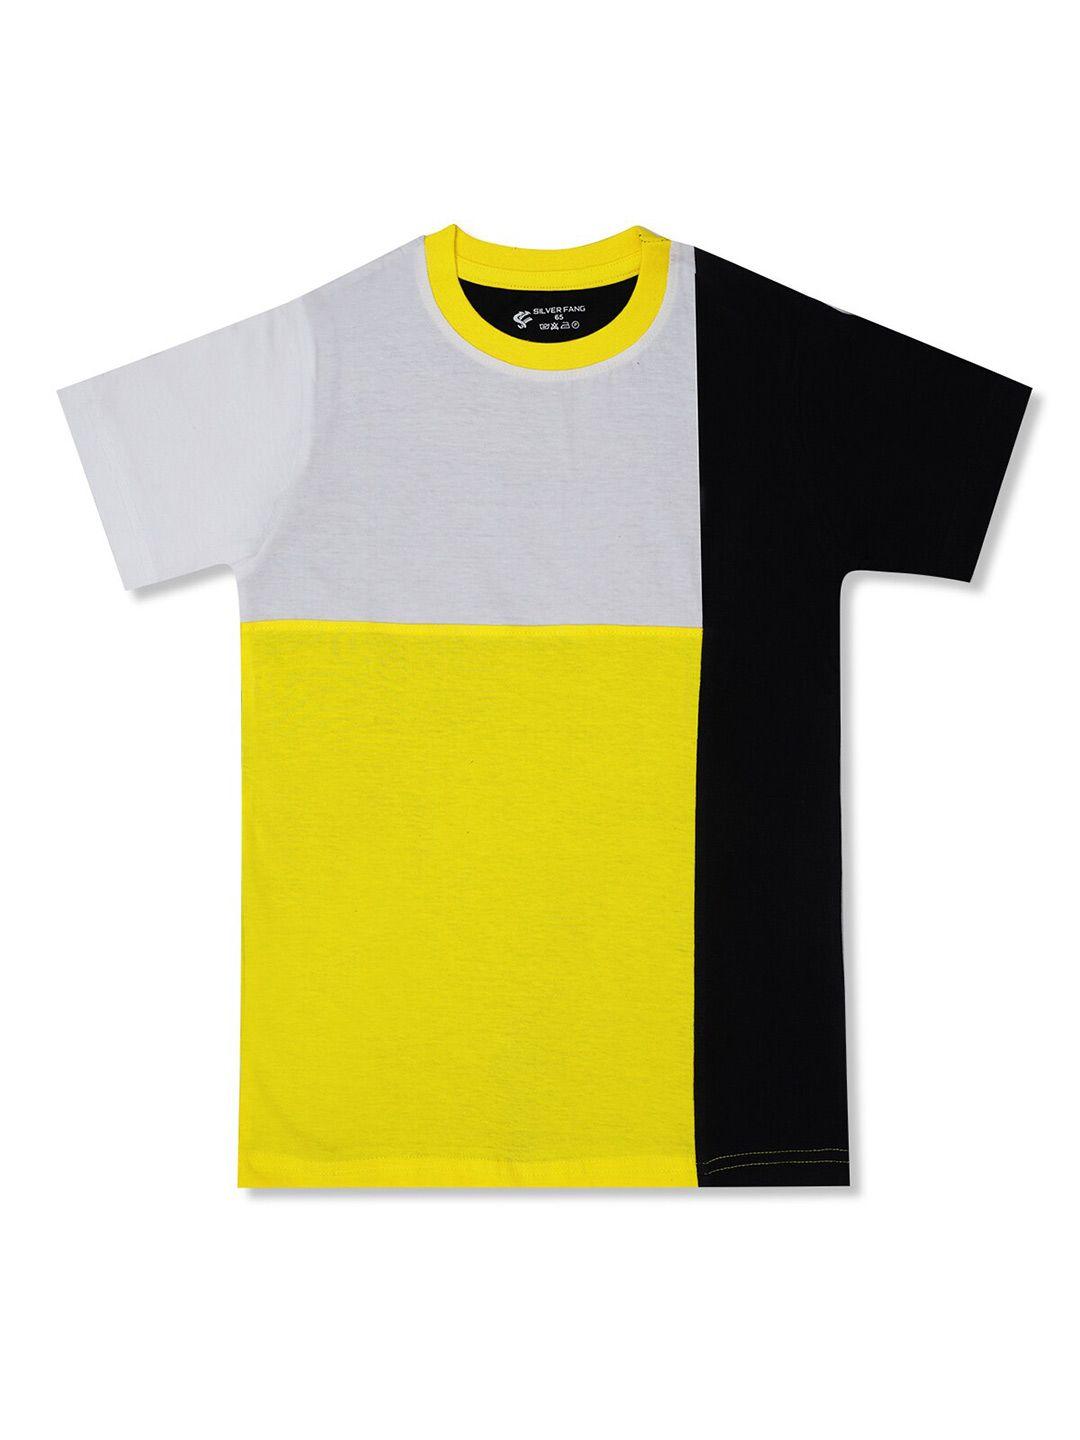 silver-fang-boys-black-&-yellow-colourblocked-t-shirt